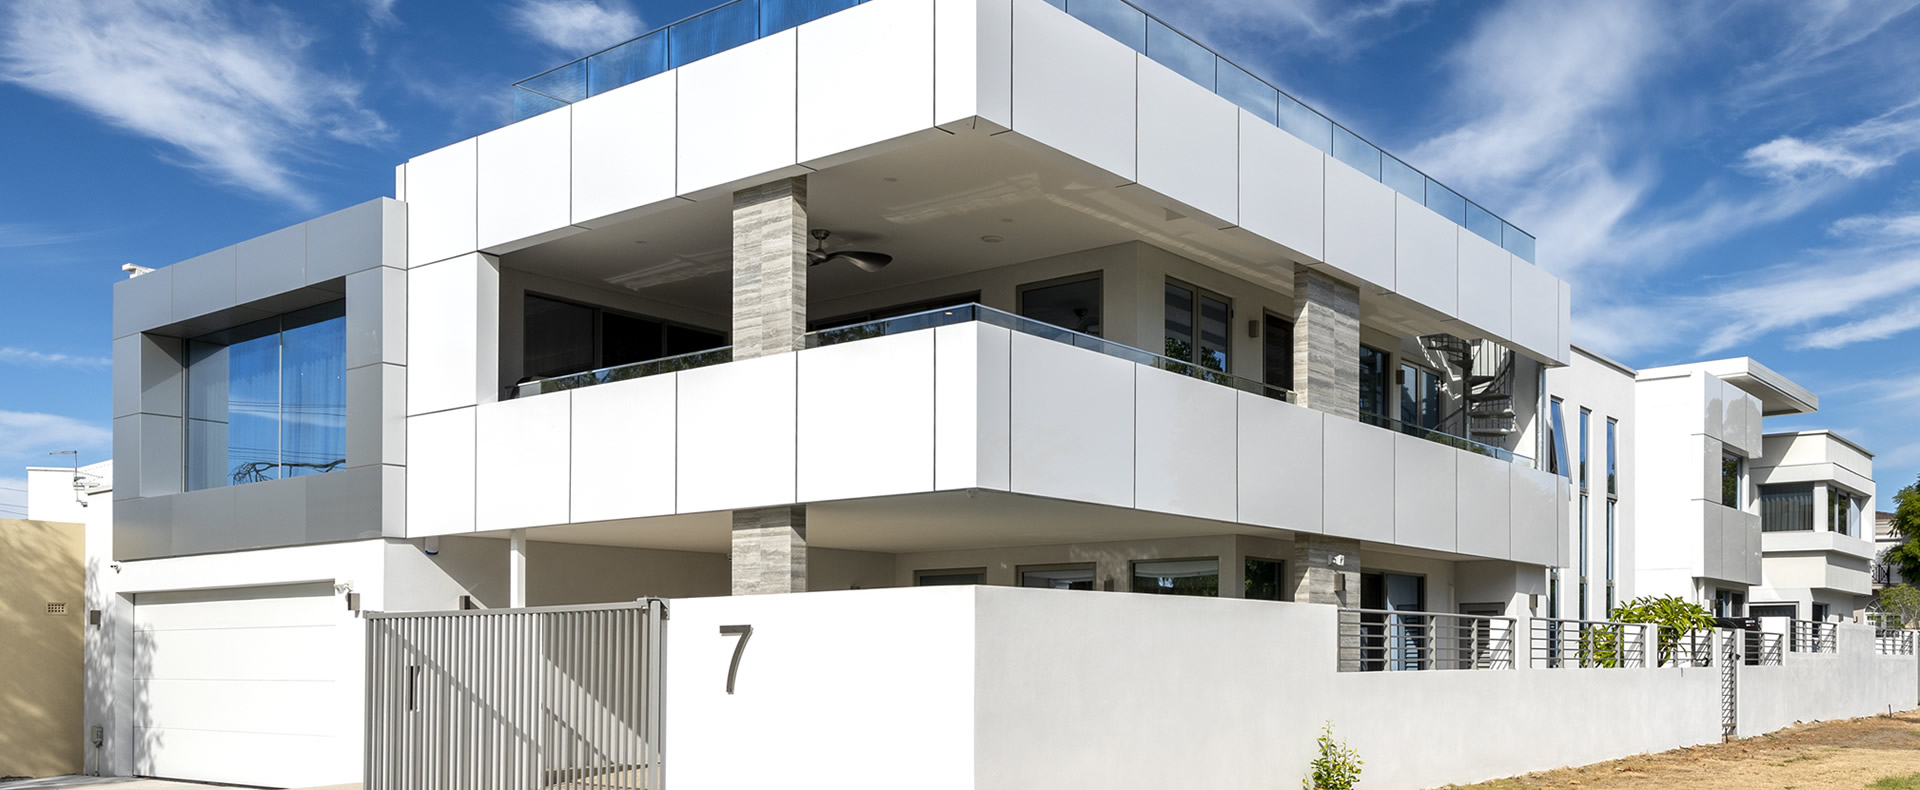 SIPs - Australia's Best Building Product